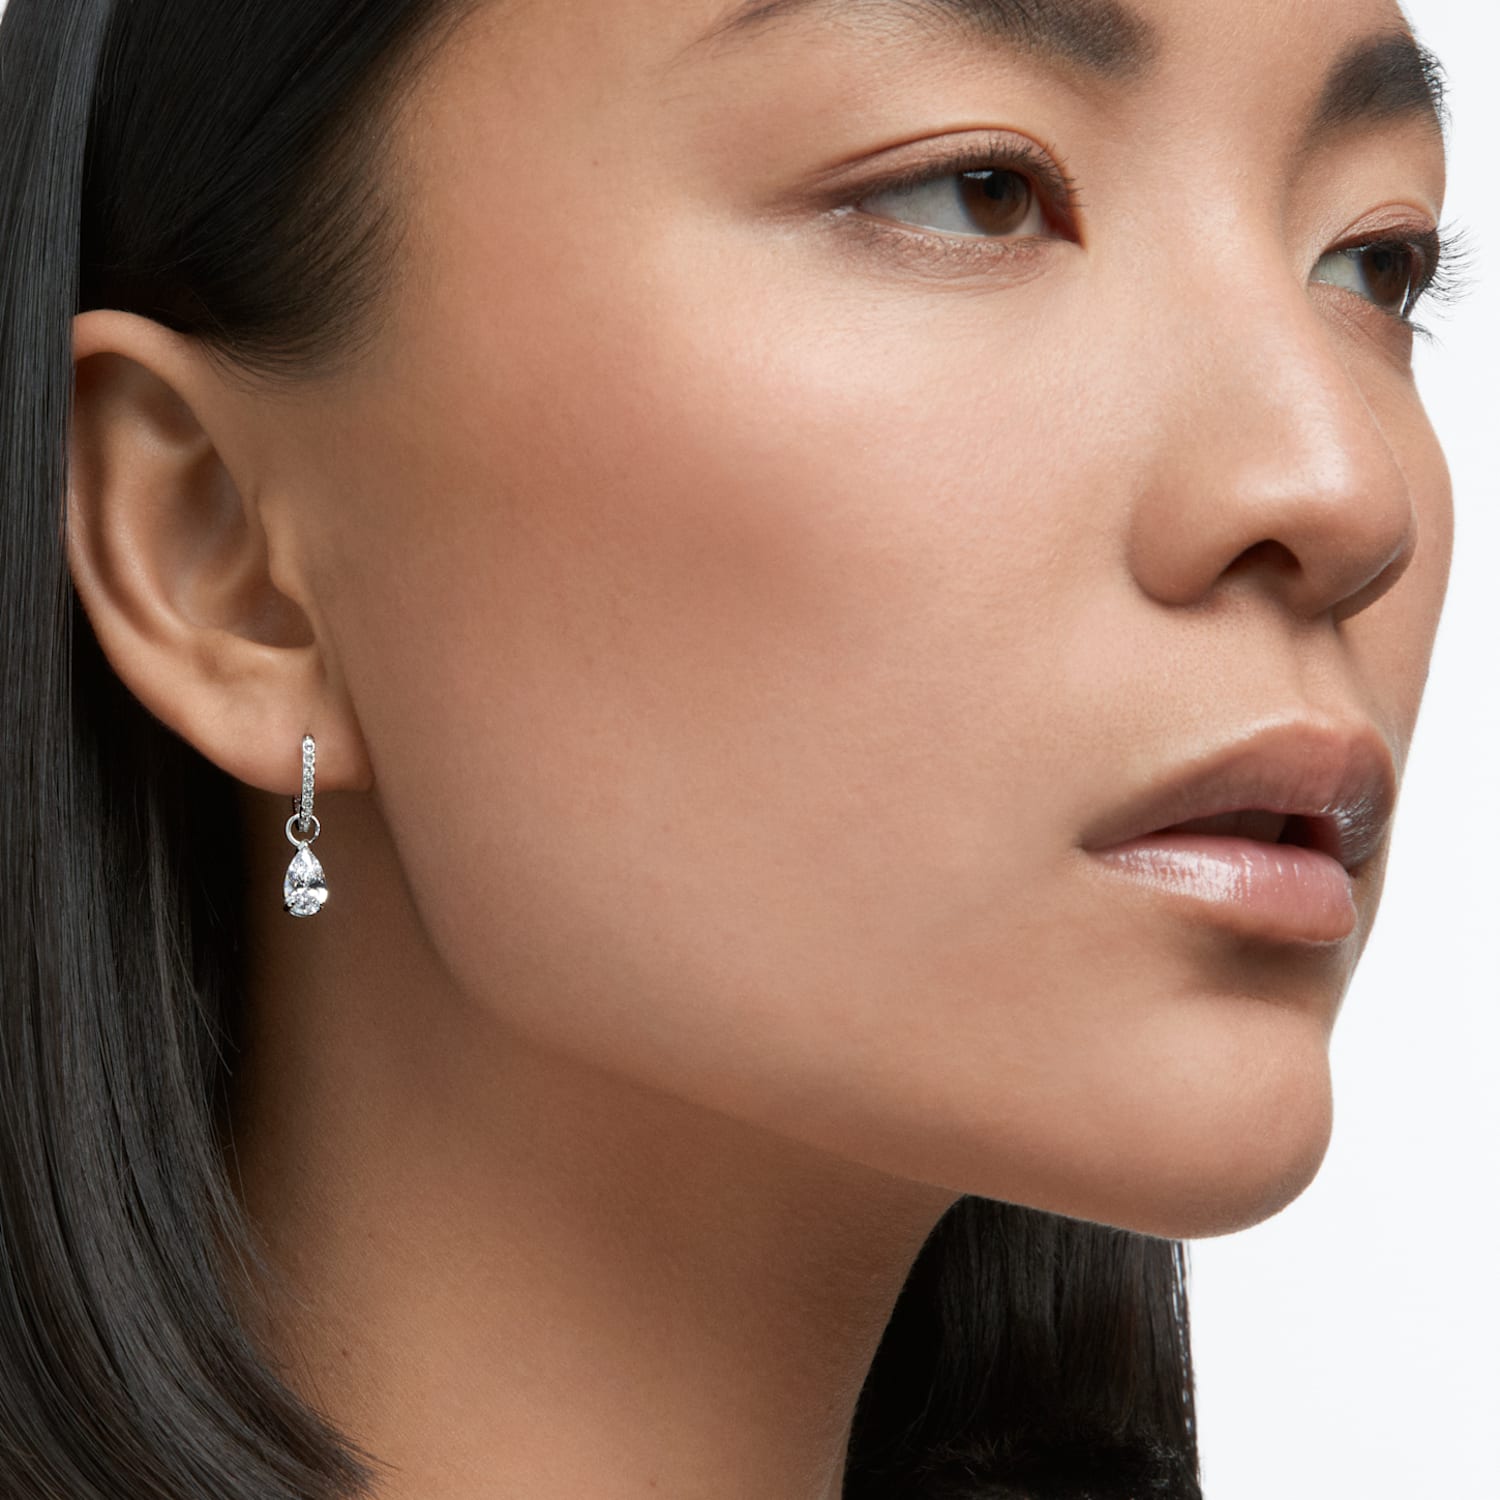 Overtreden Zeeziekte Zeldzaamheid Attract hoop earrings, Pear cut crystal, White, Rhodium plated | Swarovski .com